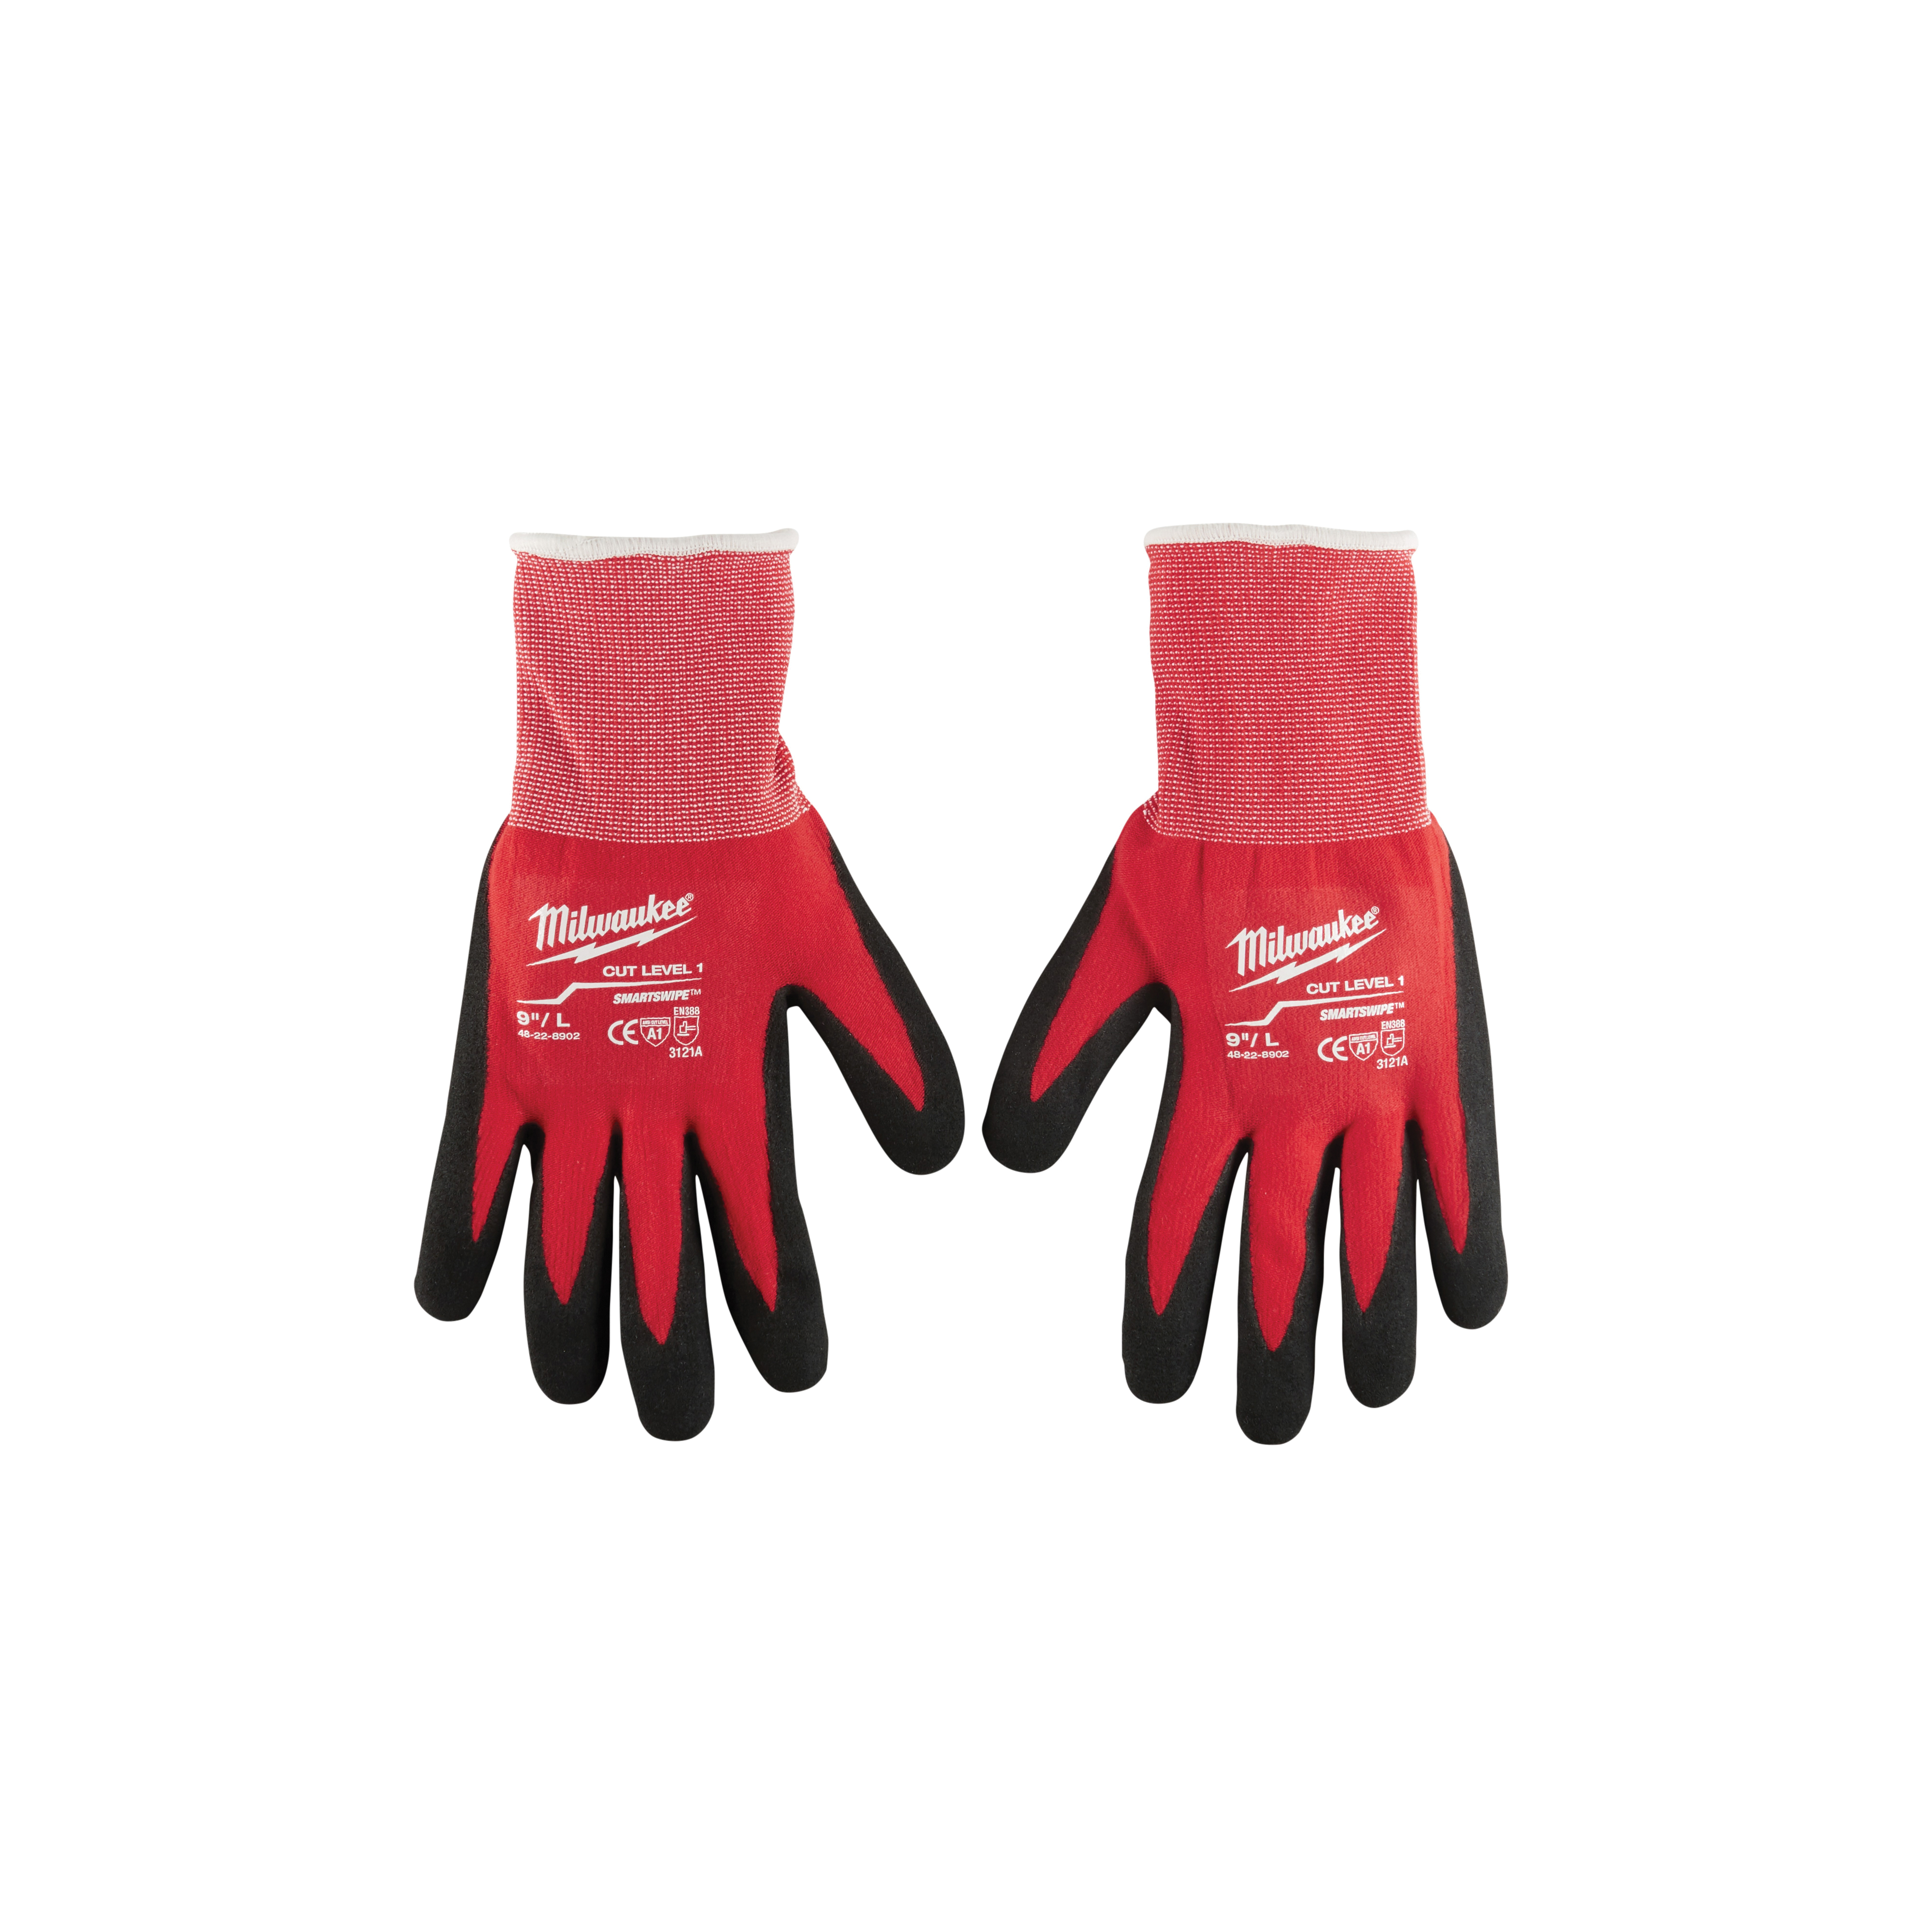 Gripper Gloves - Allesco Work Gloves